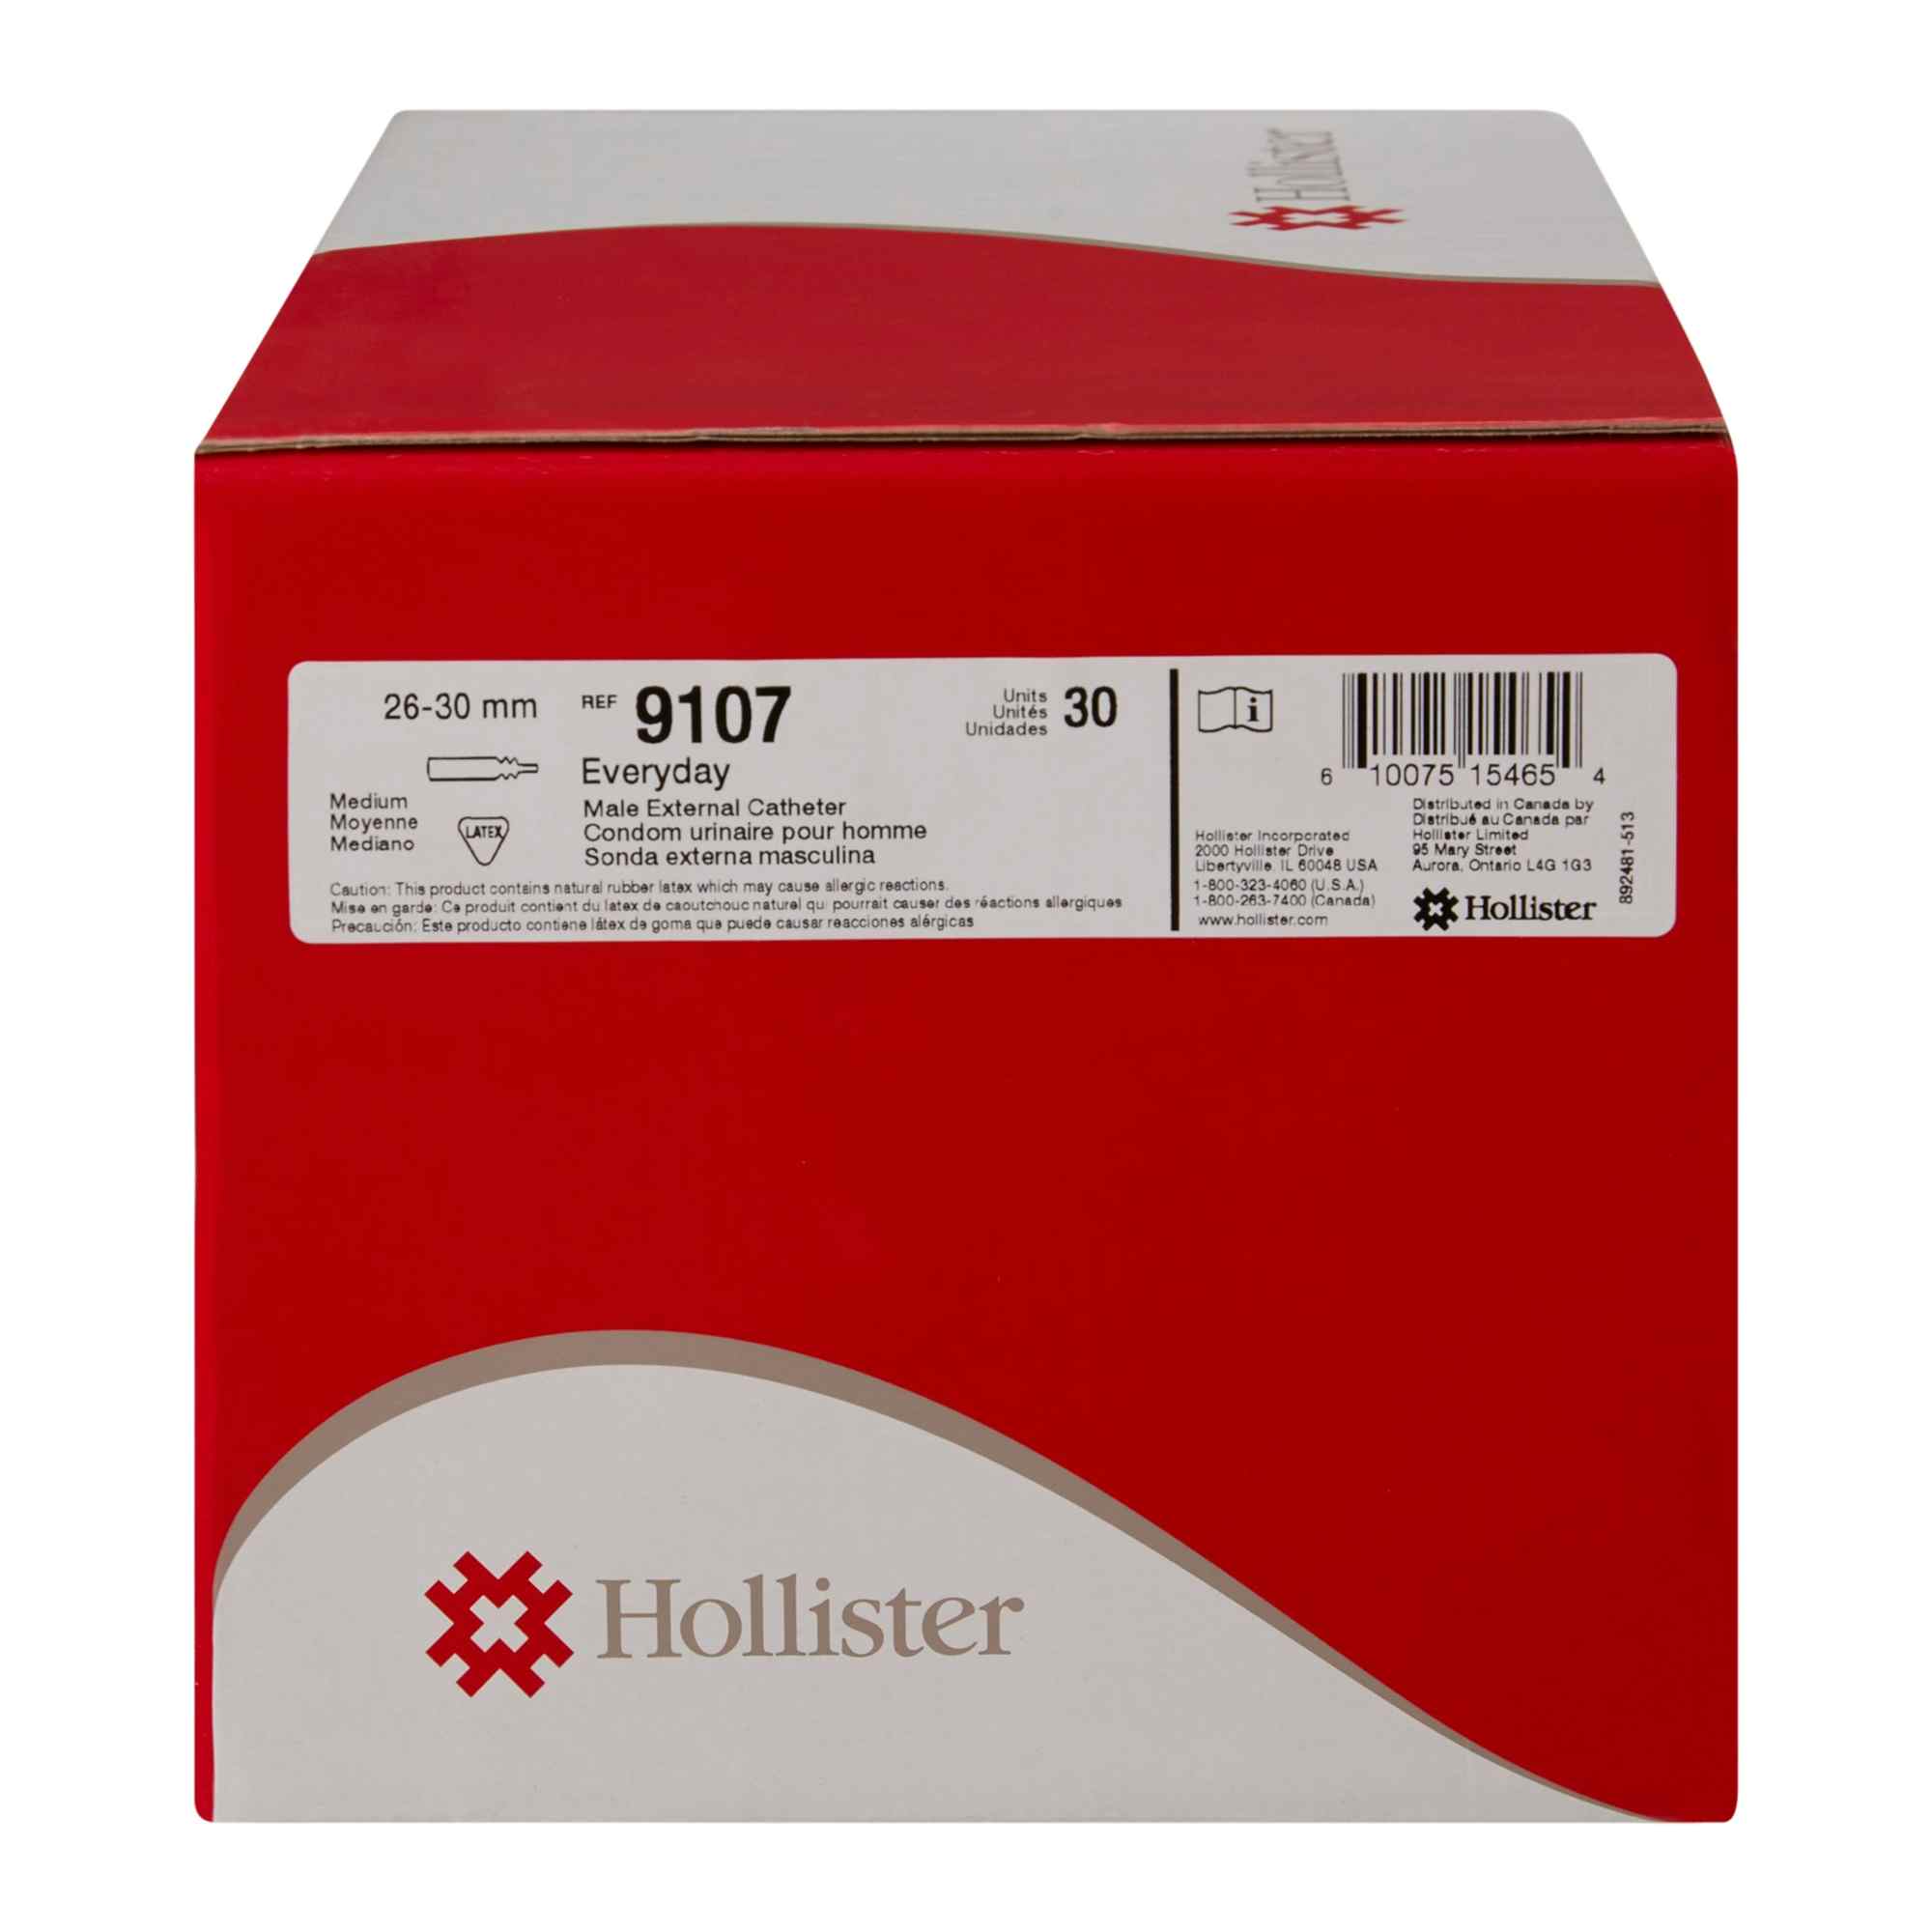 Hollister Everyday Male External Catheter